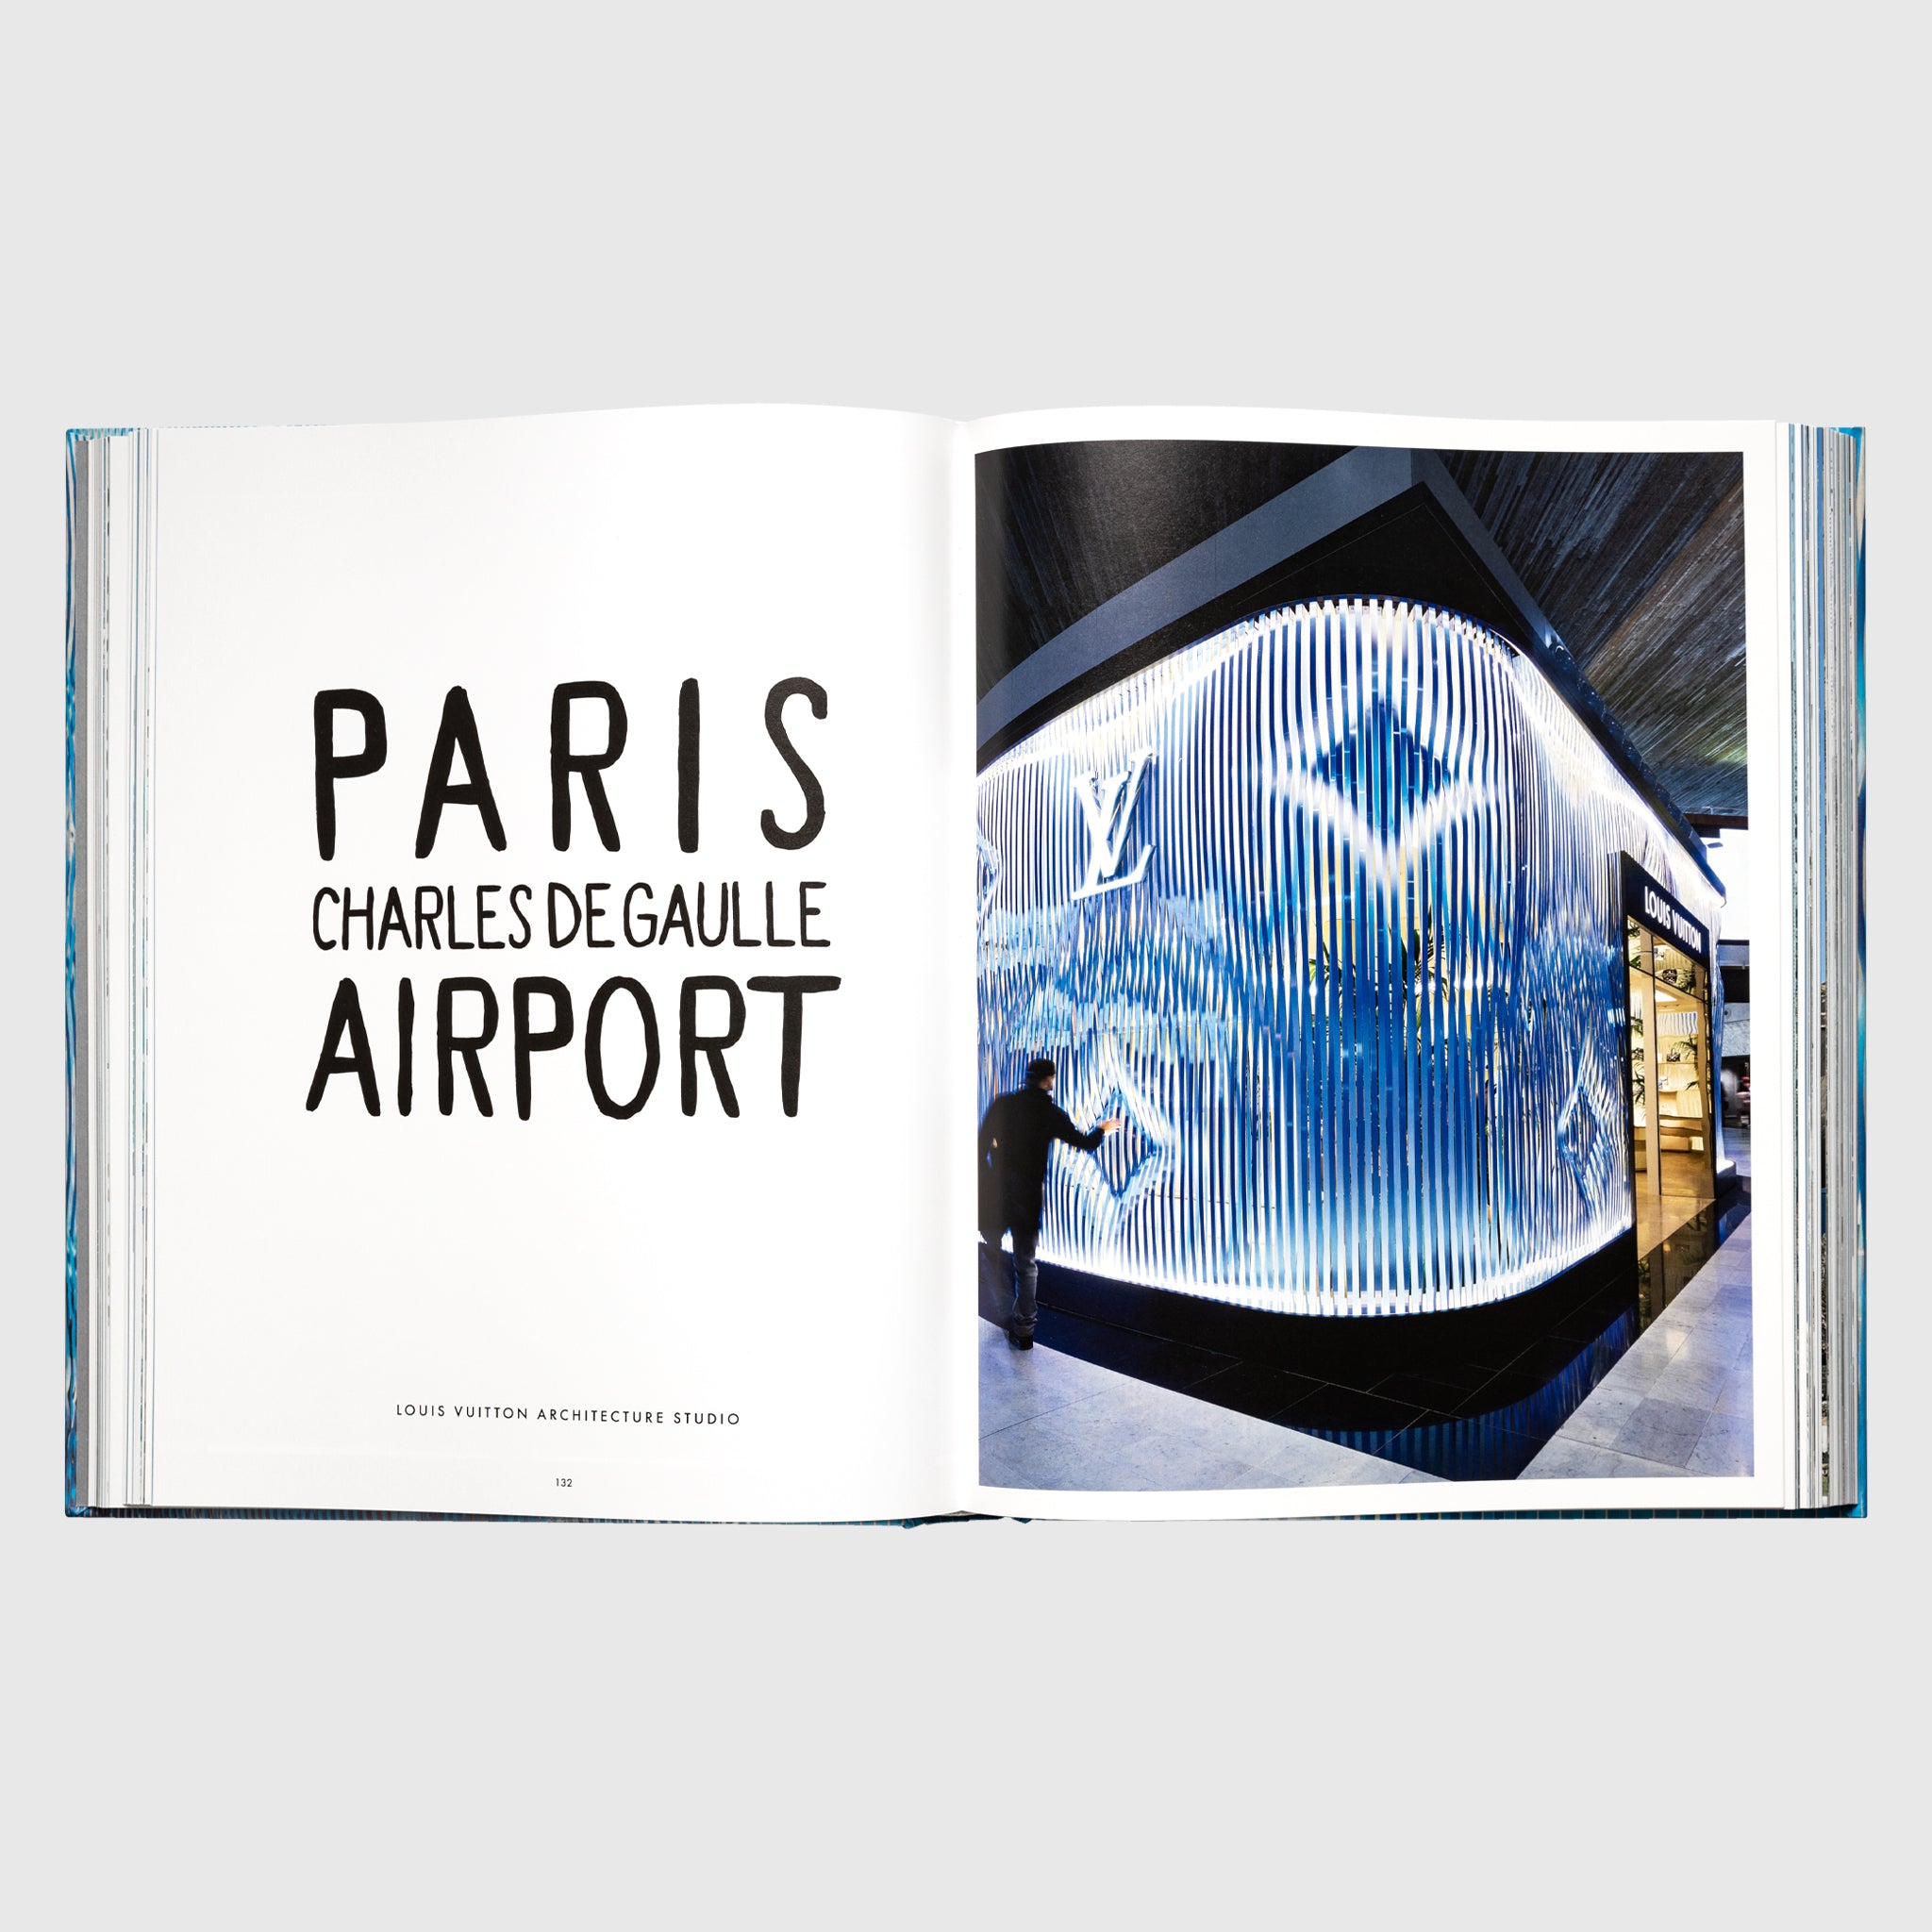 LOUIS VUITTON SKIN: ARCHITECTURE OF LUXURY (PARIS EDITION)